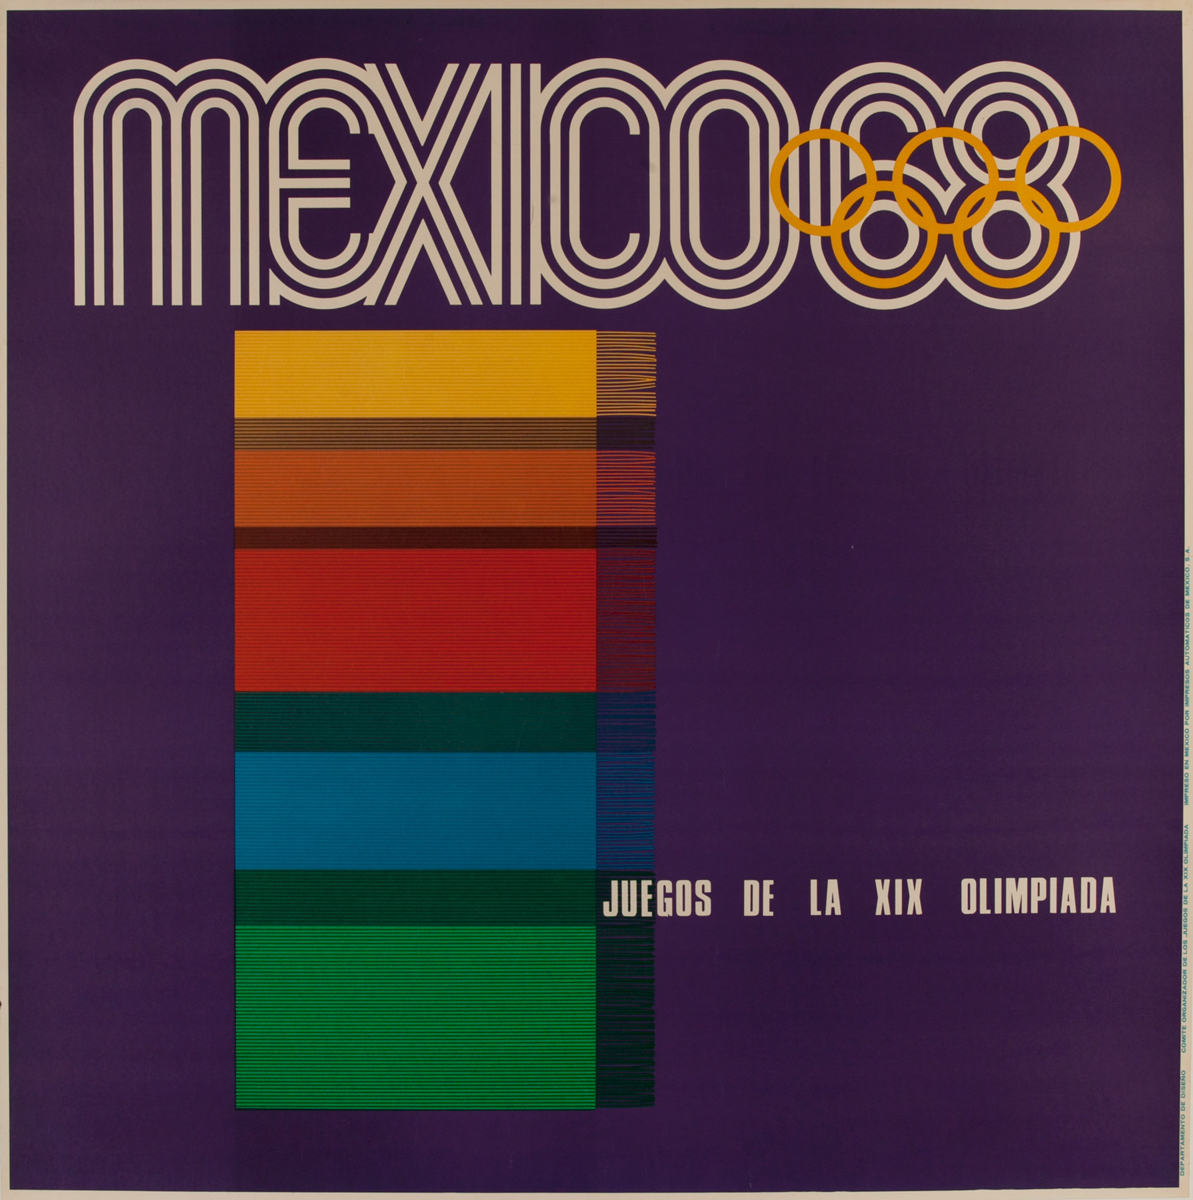 Original 1968 Mexico City Olympics Poster purple backround